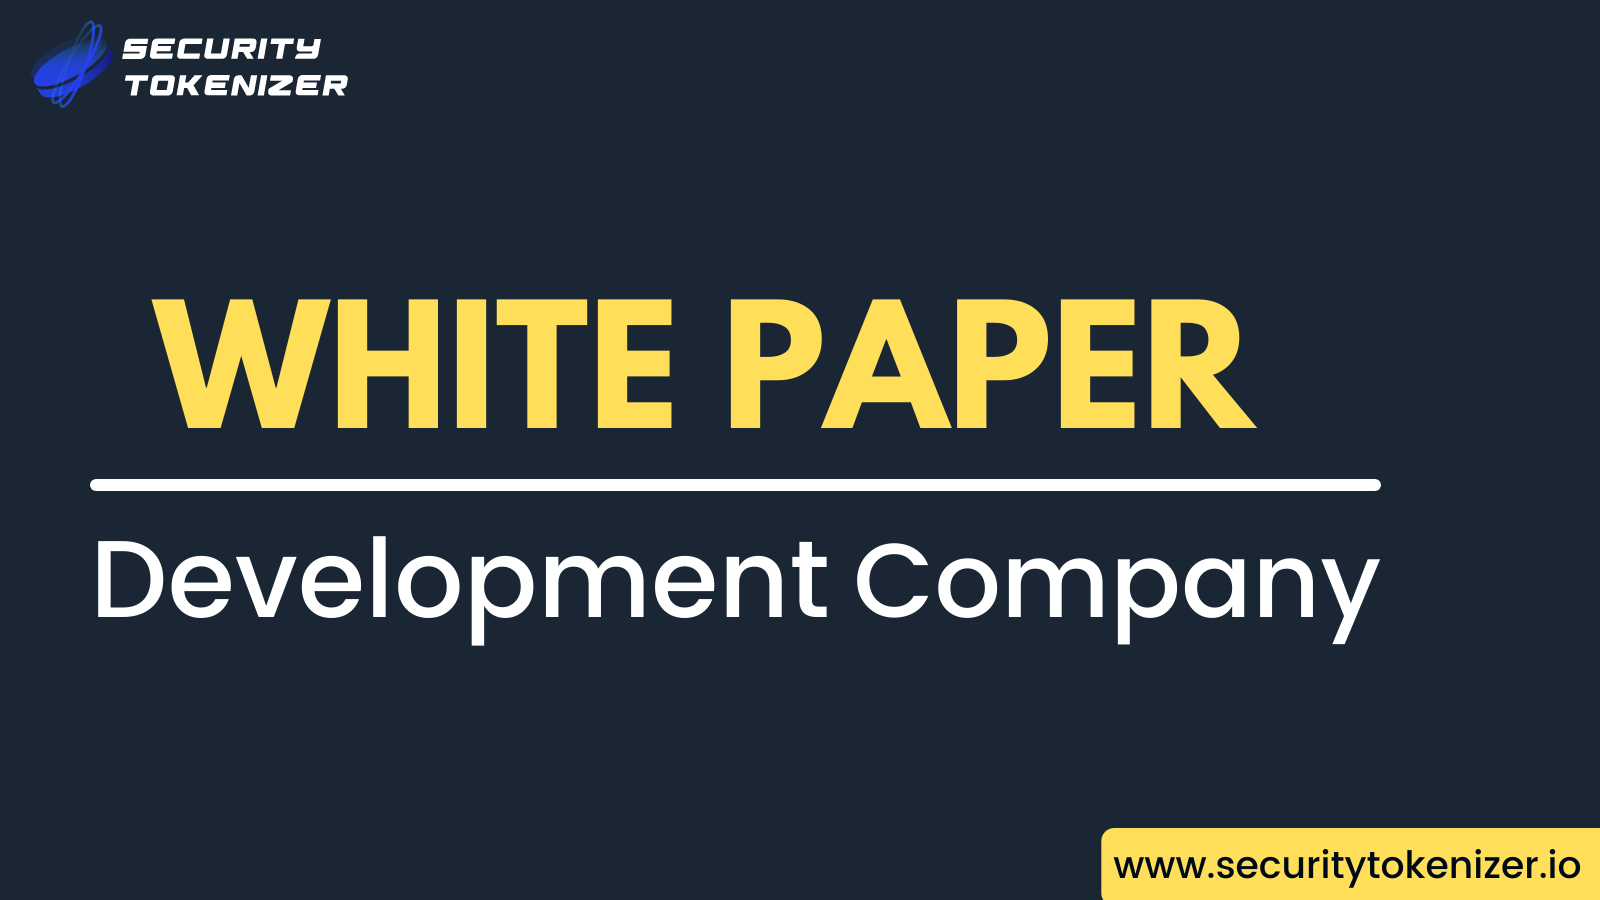 White Paper Development Company - Security Tokenizer